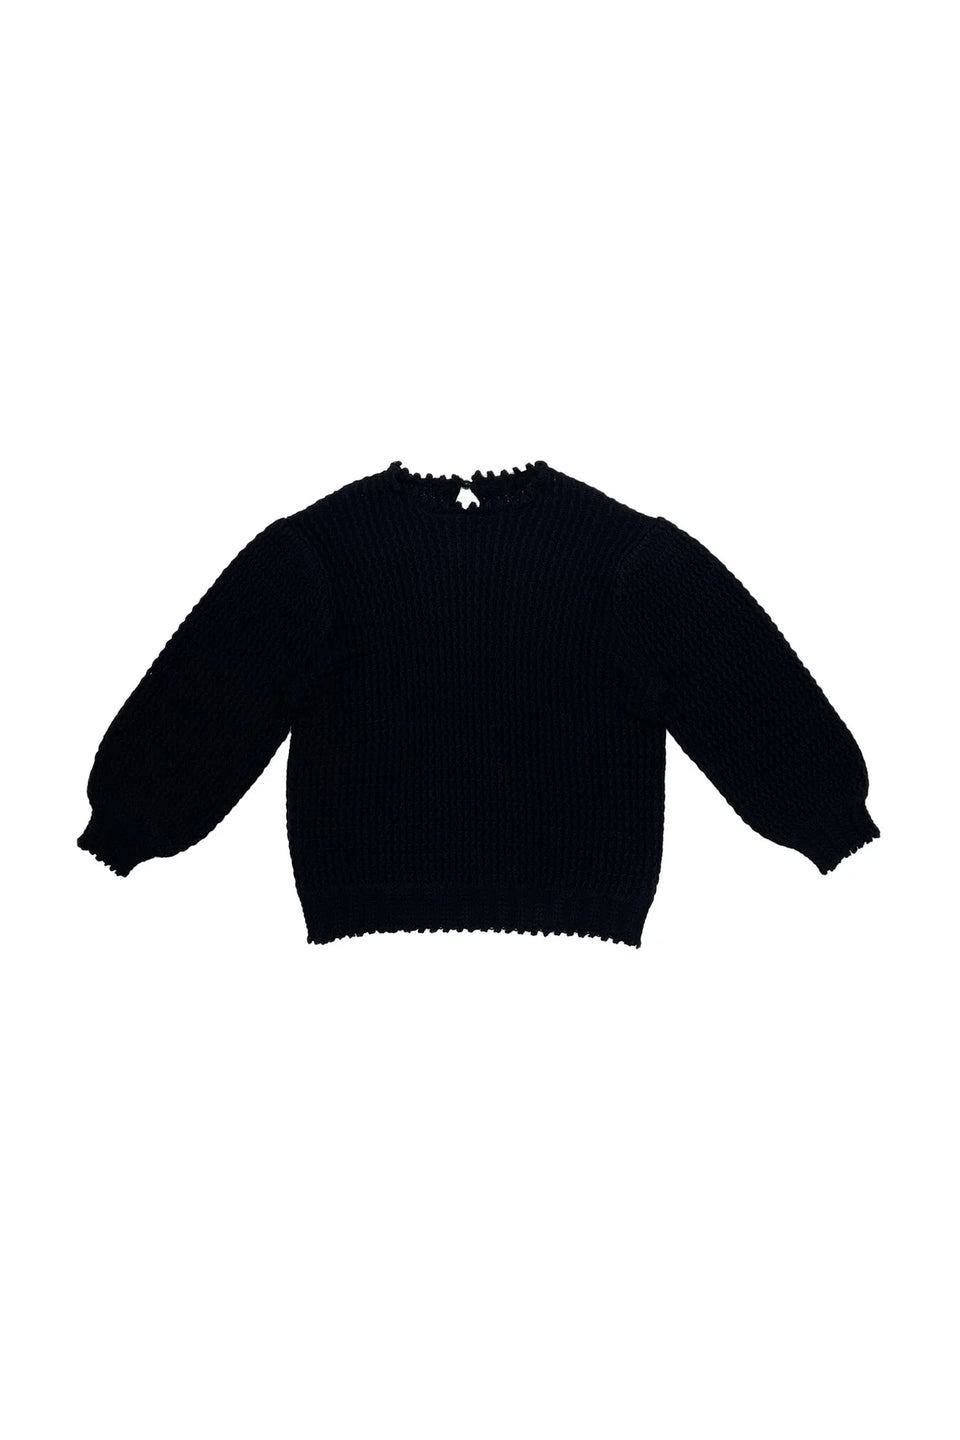 Elle Oh Elle Black Chunky Knit Sweater